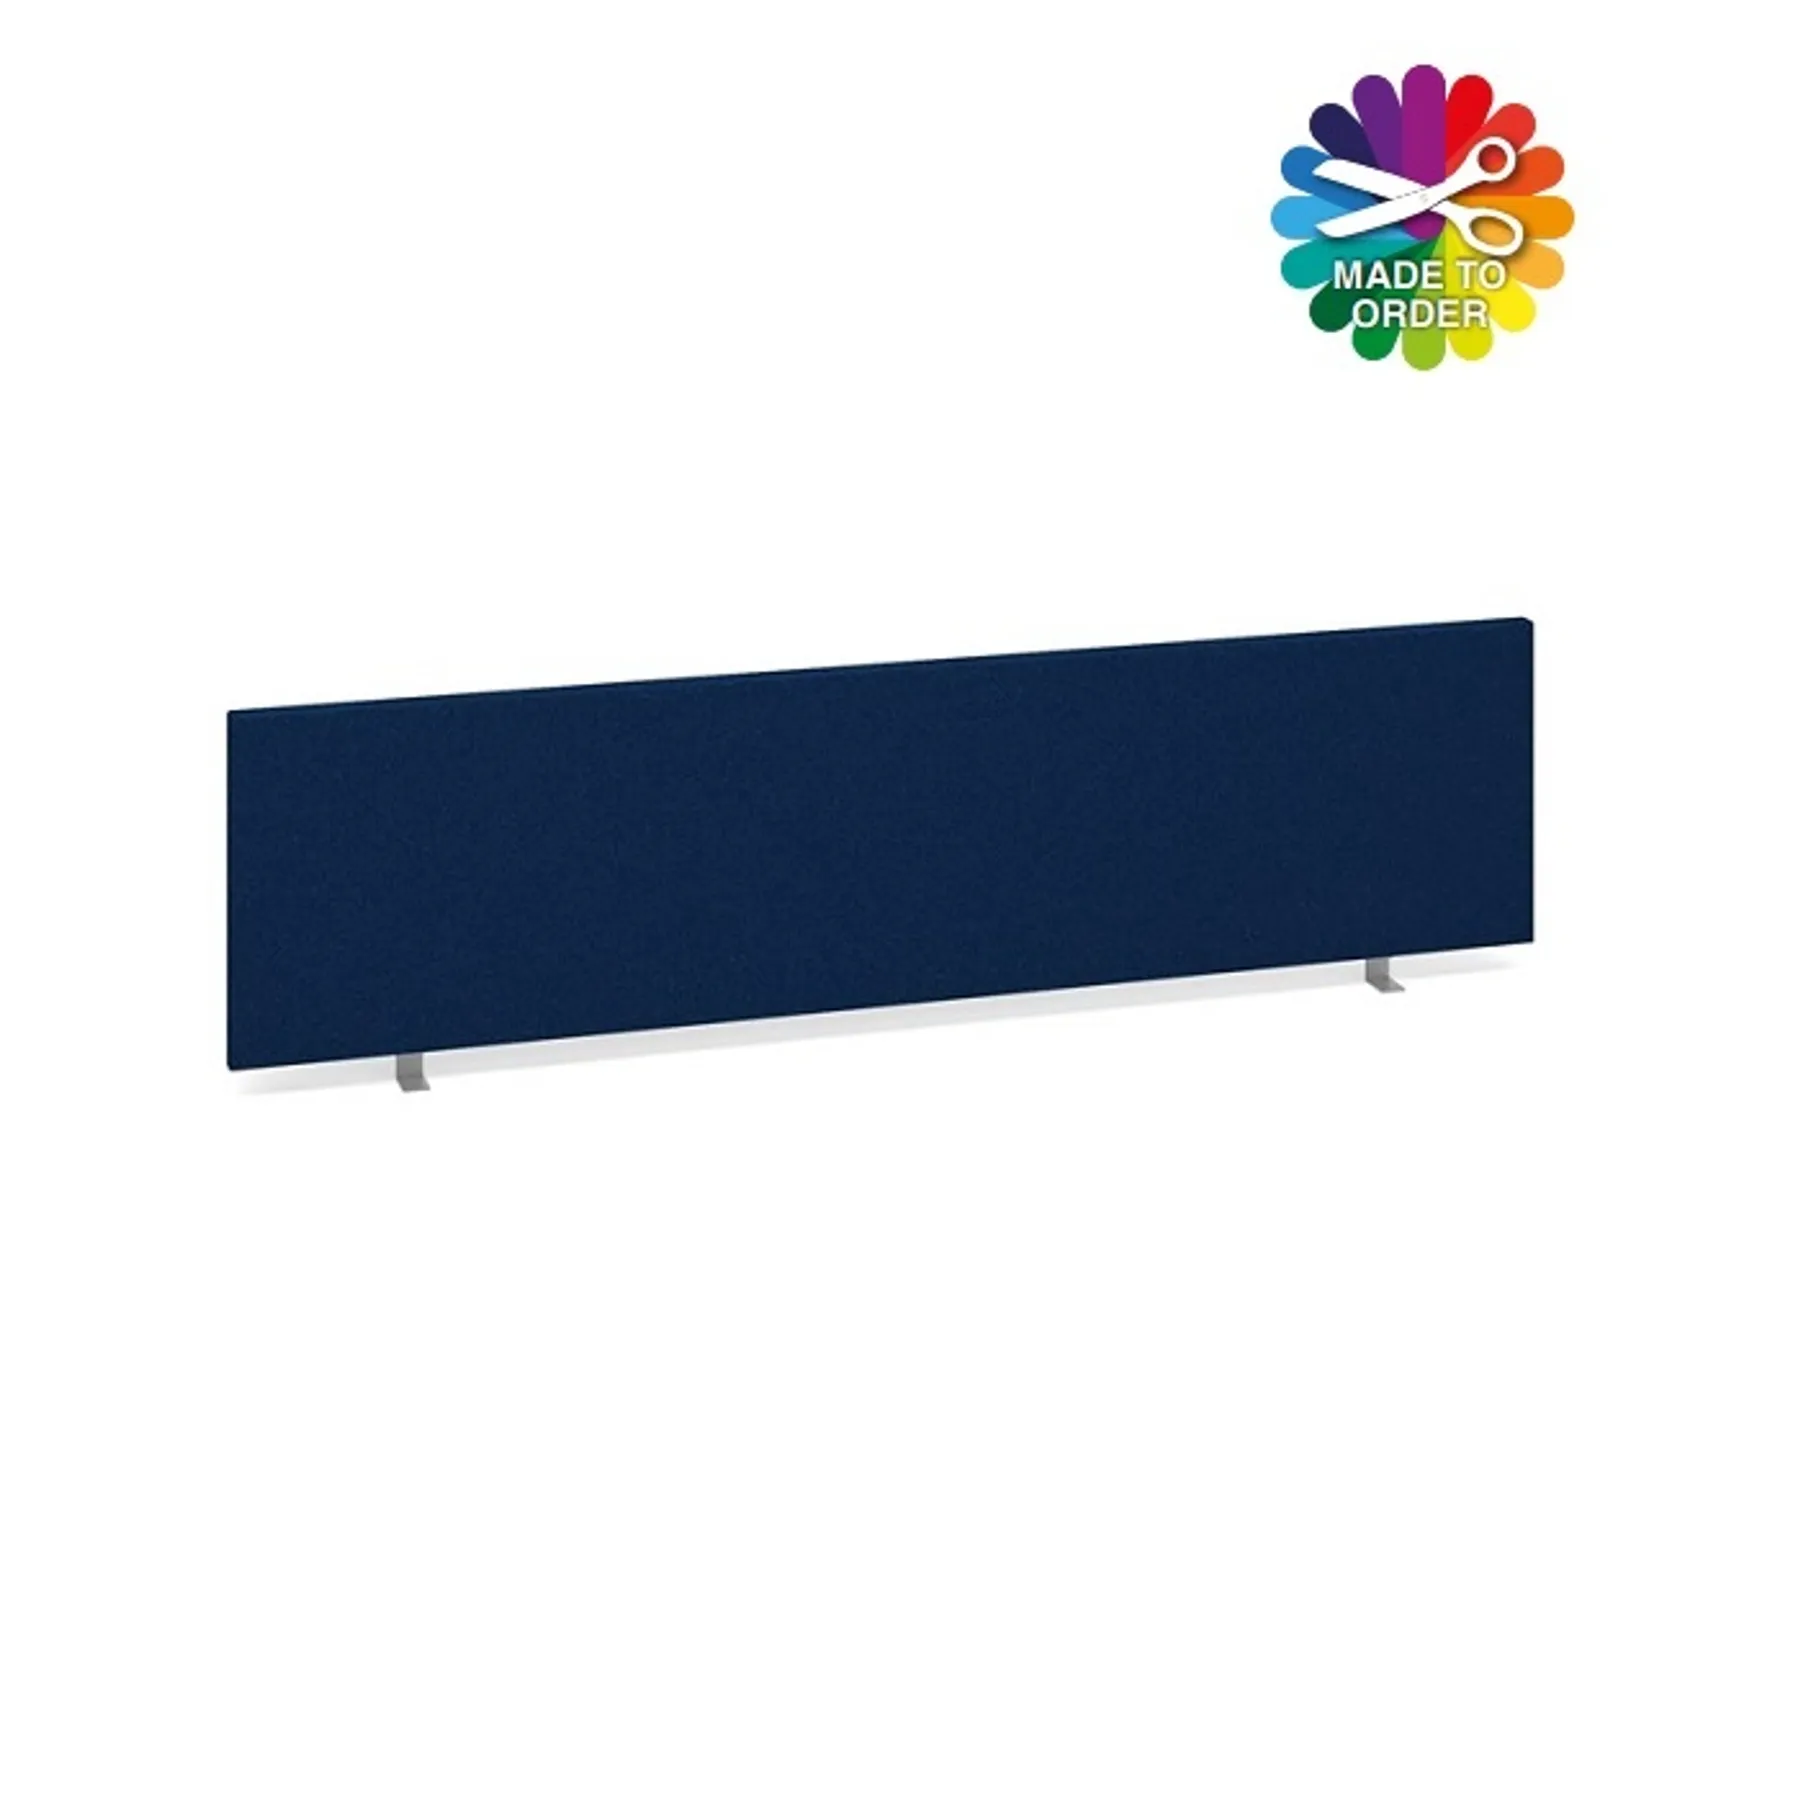 Lof direct desk mounted screen blue fabric ES1600 S B colour logo